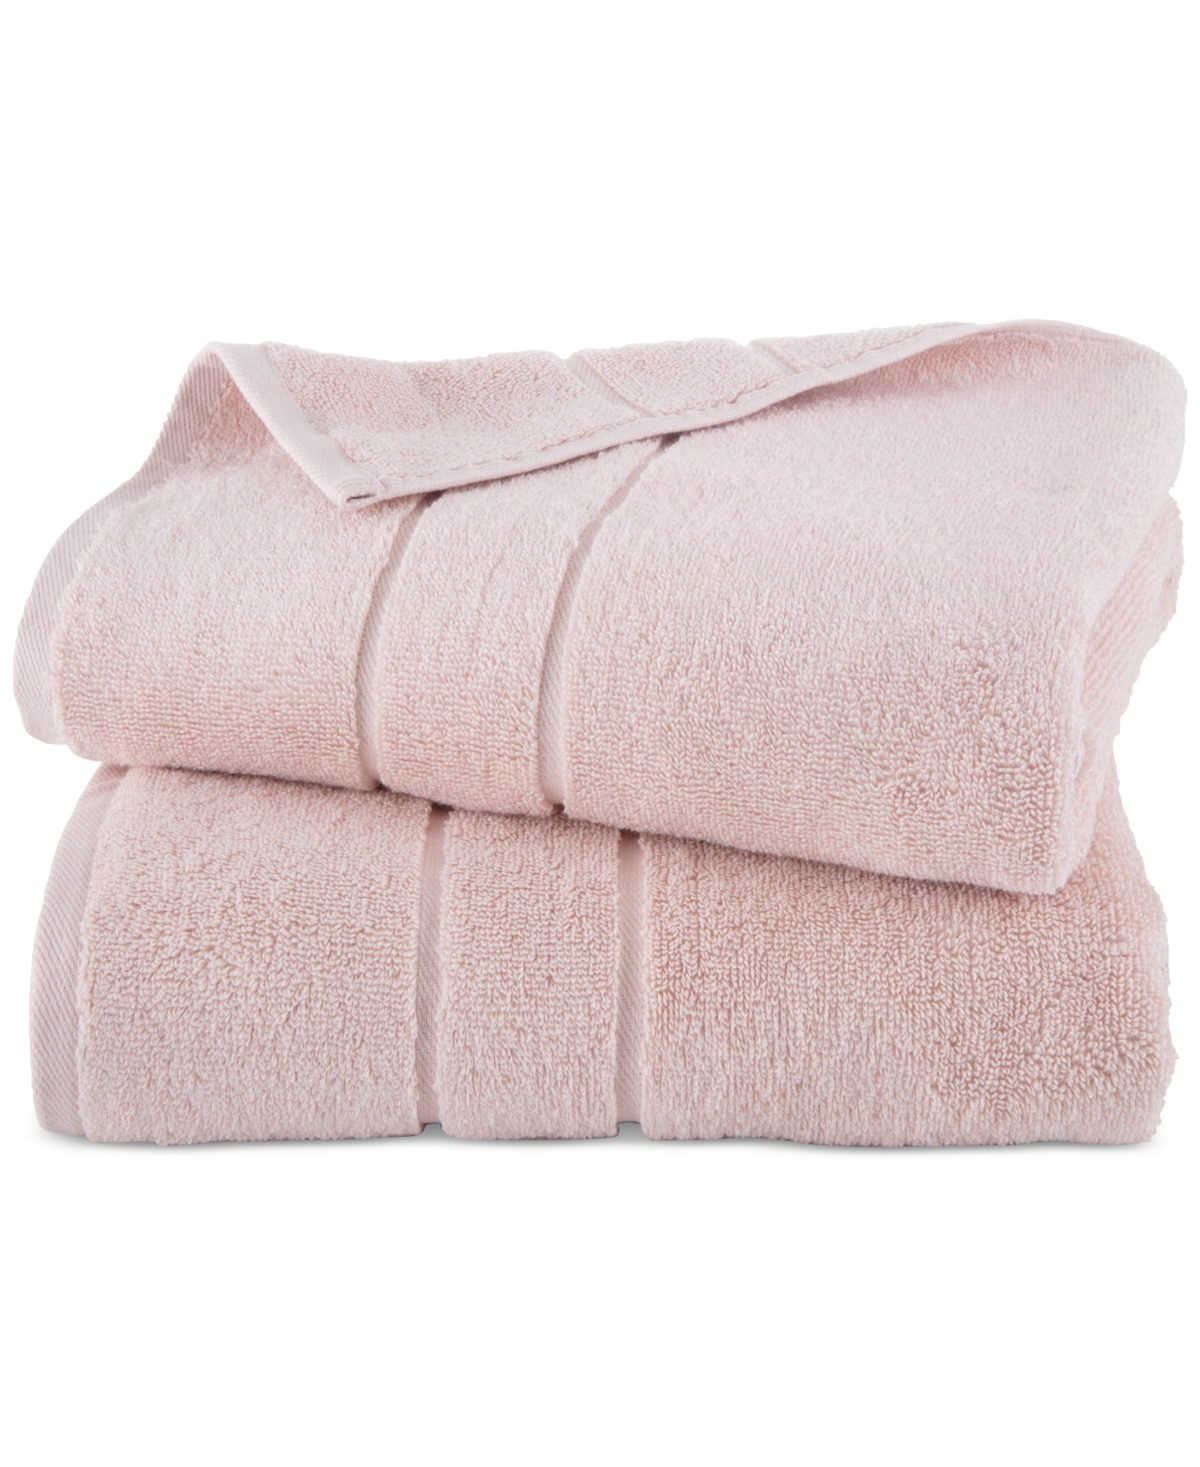 Clean Design Home X Martex Low Lint 2 Pack Supima Cotton Bath Towels In Blush